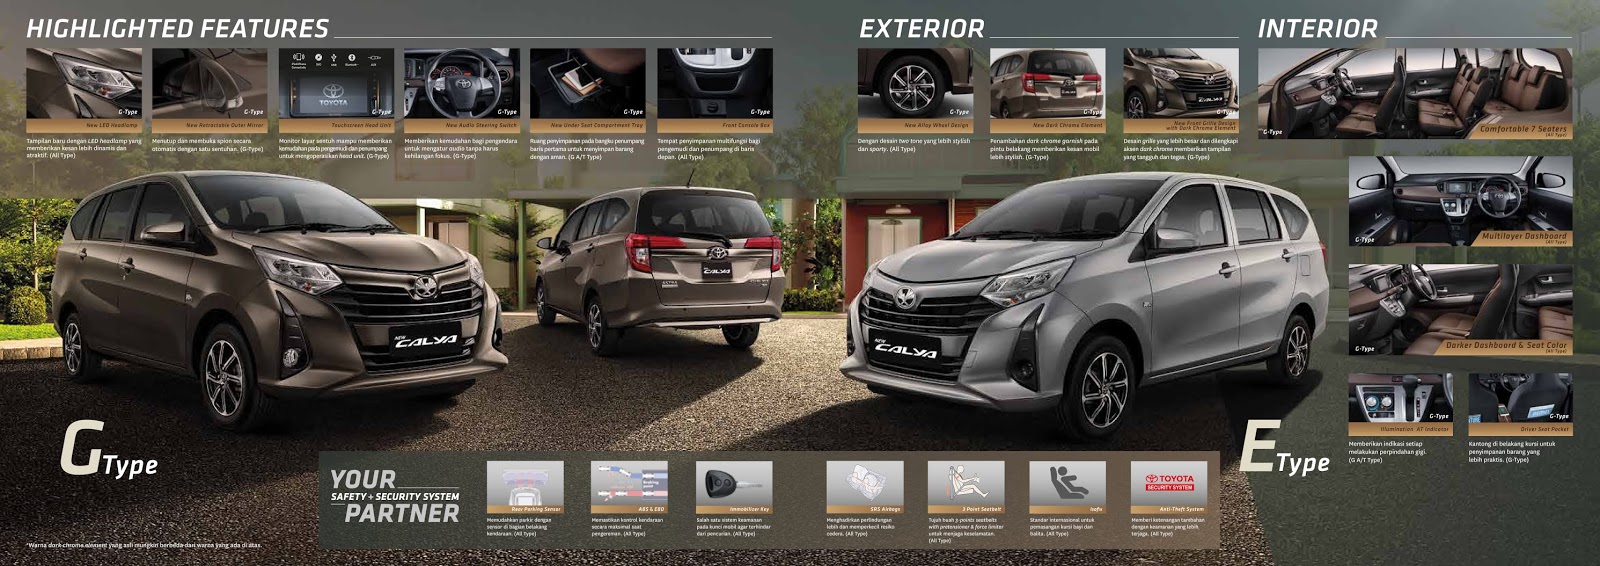 New Calya - Info Promo & Harga Toyota Calya Bali 2020